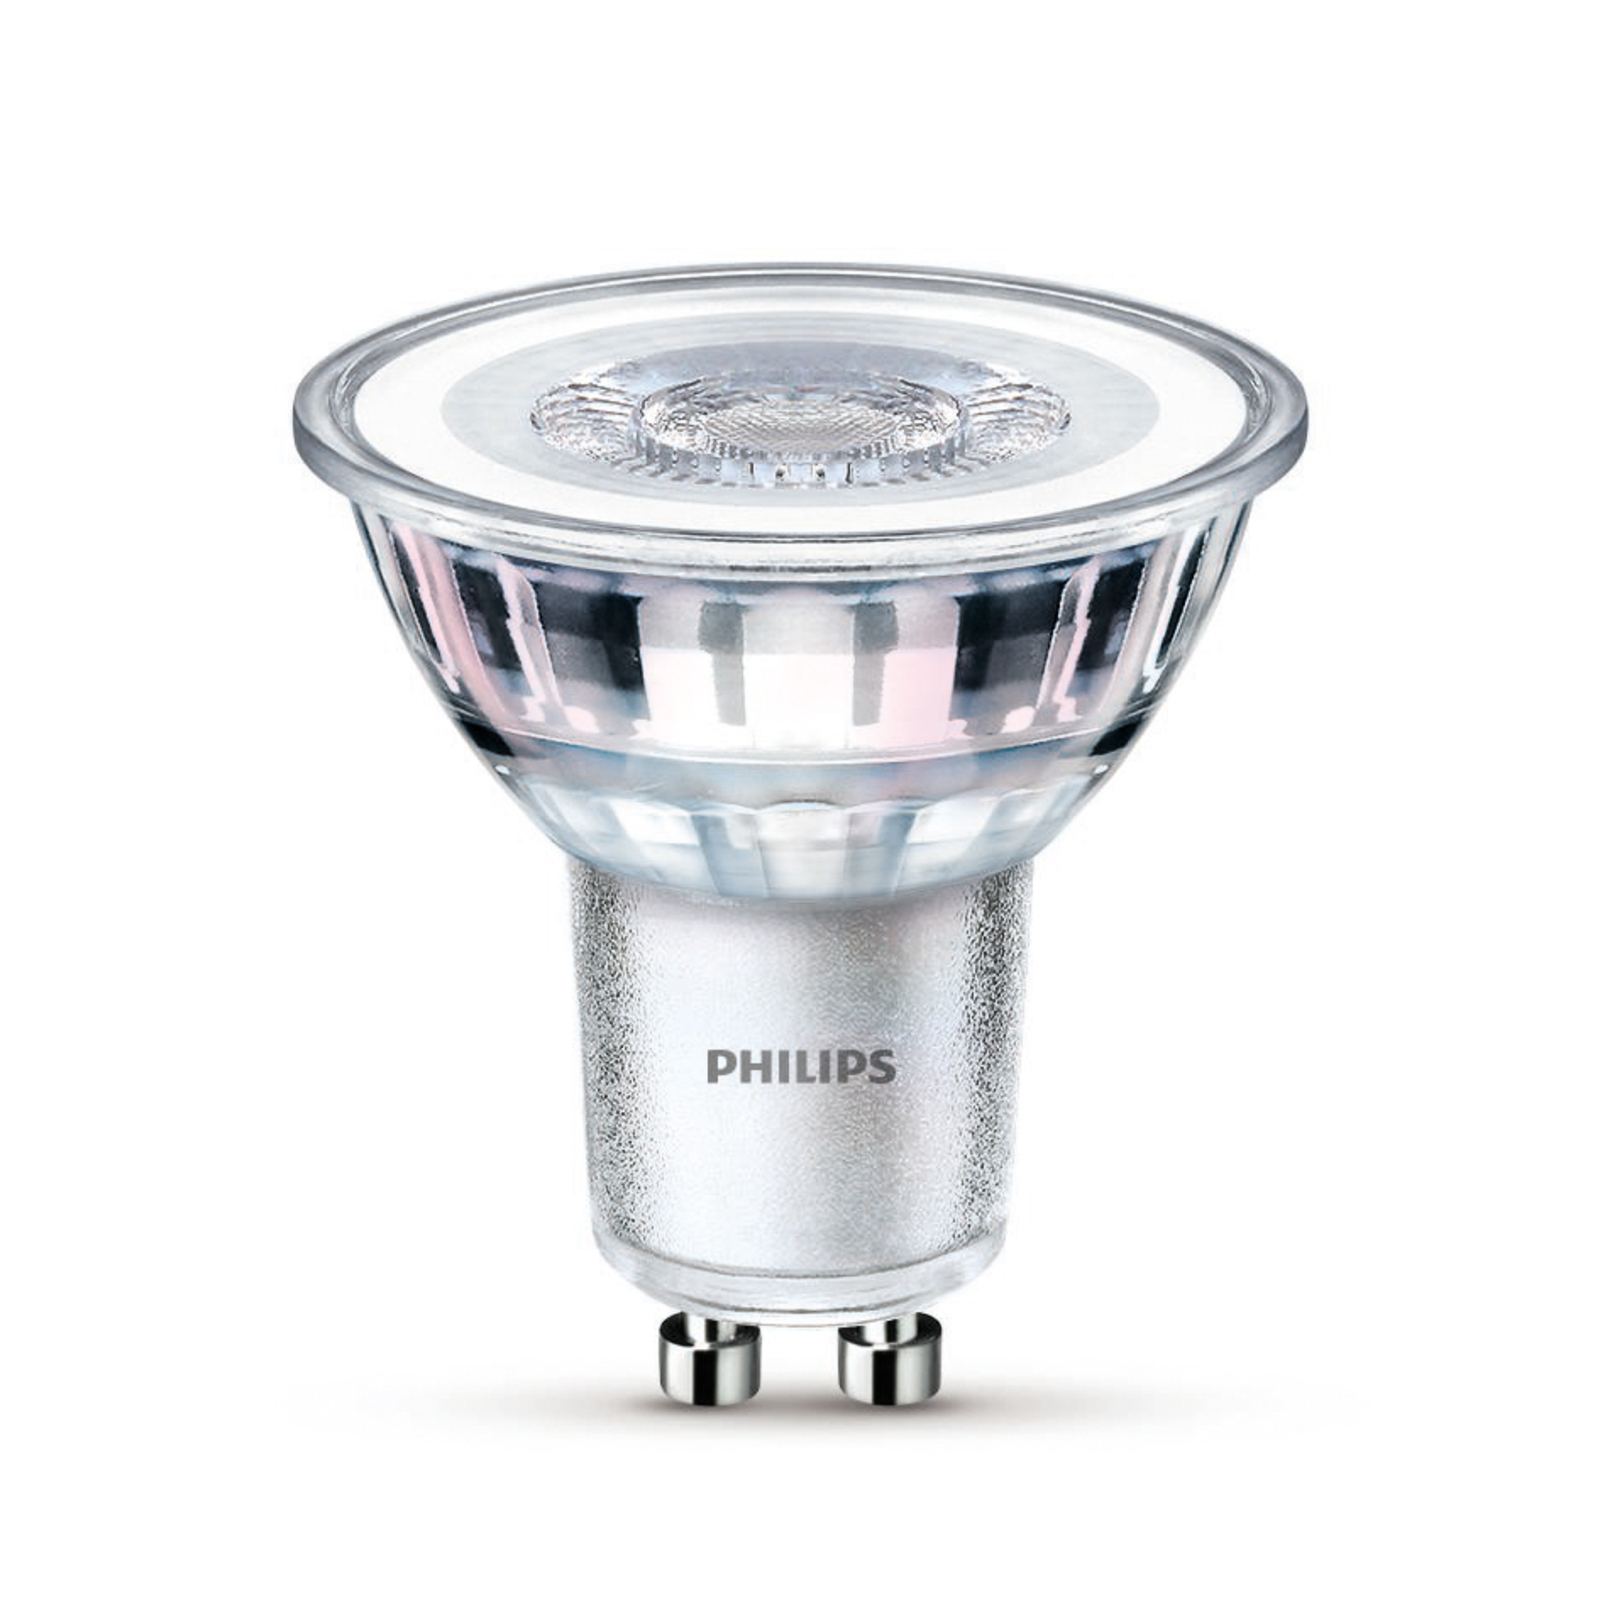 Philips LED bulb GU10 4.6W 355lm 827 clear 36° x3